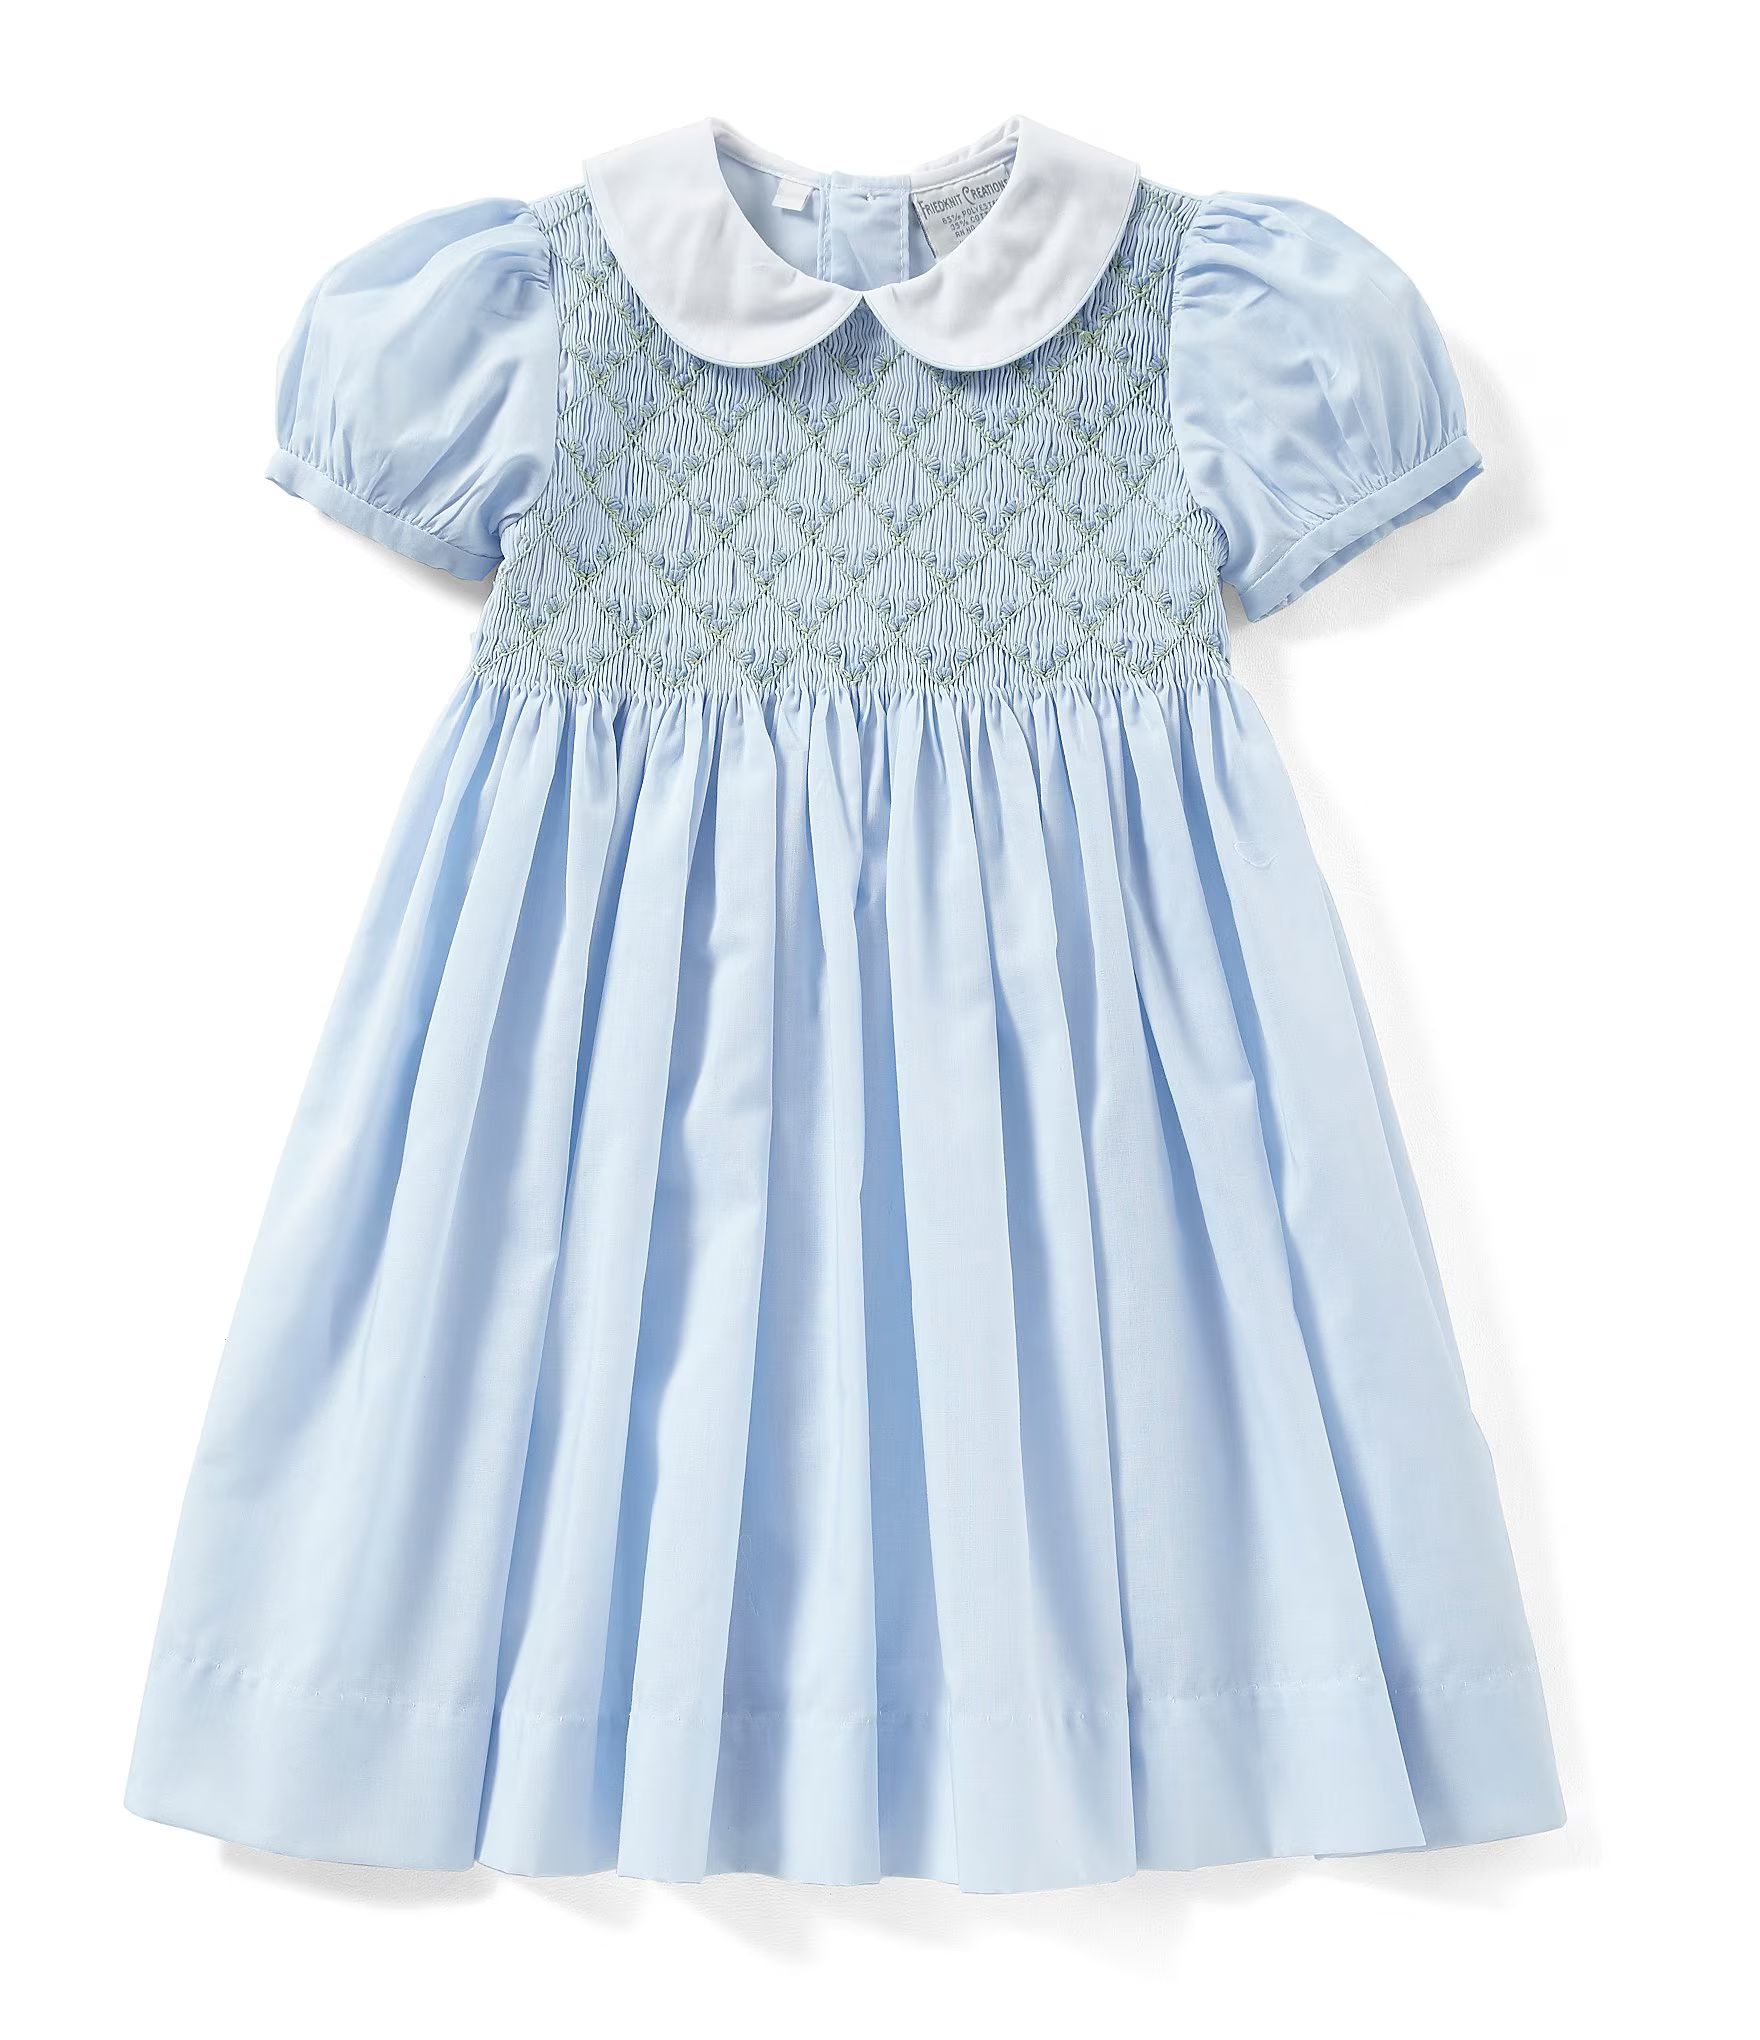 Baby Girls 12-24 Months Floral Printed Smocked Dress | Dillards